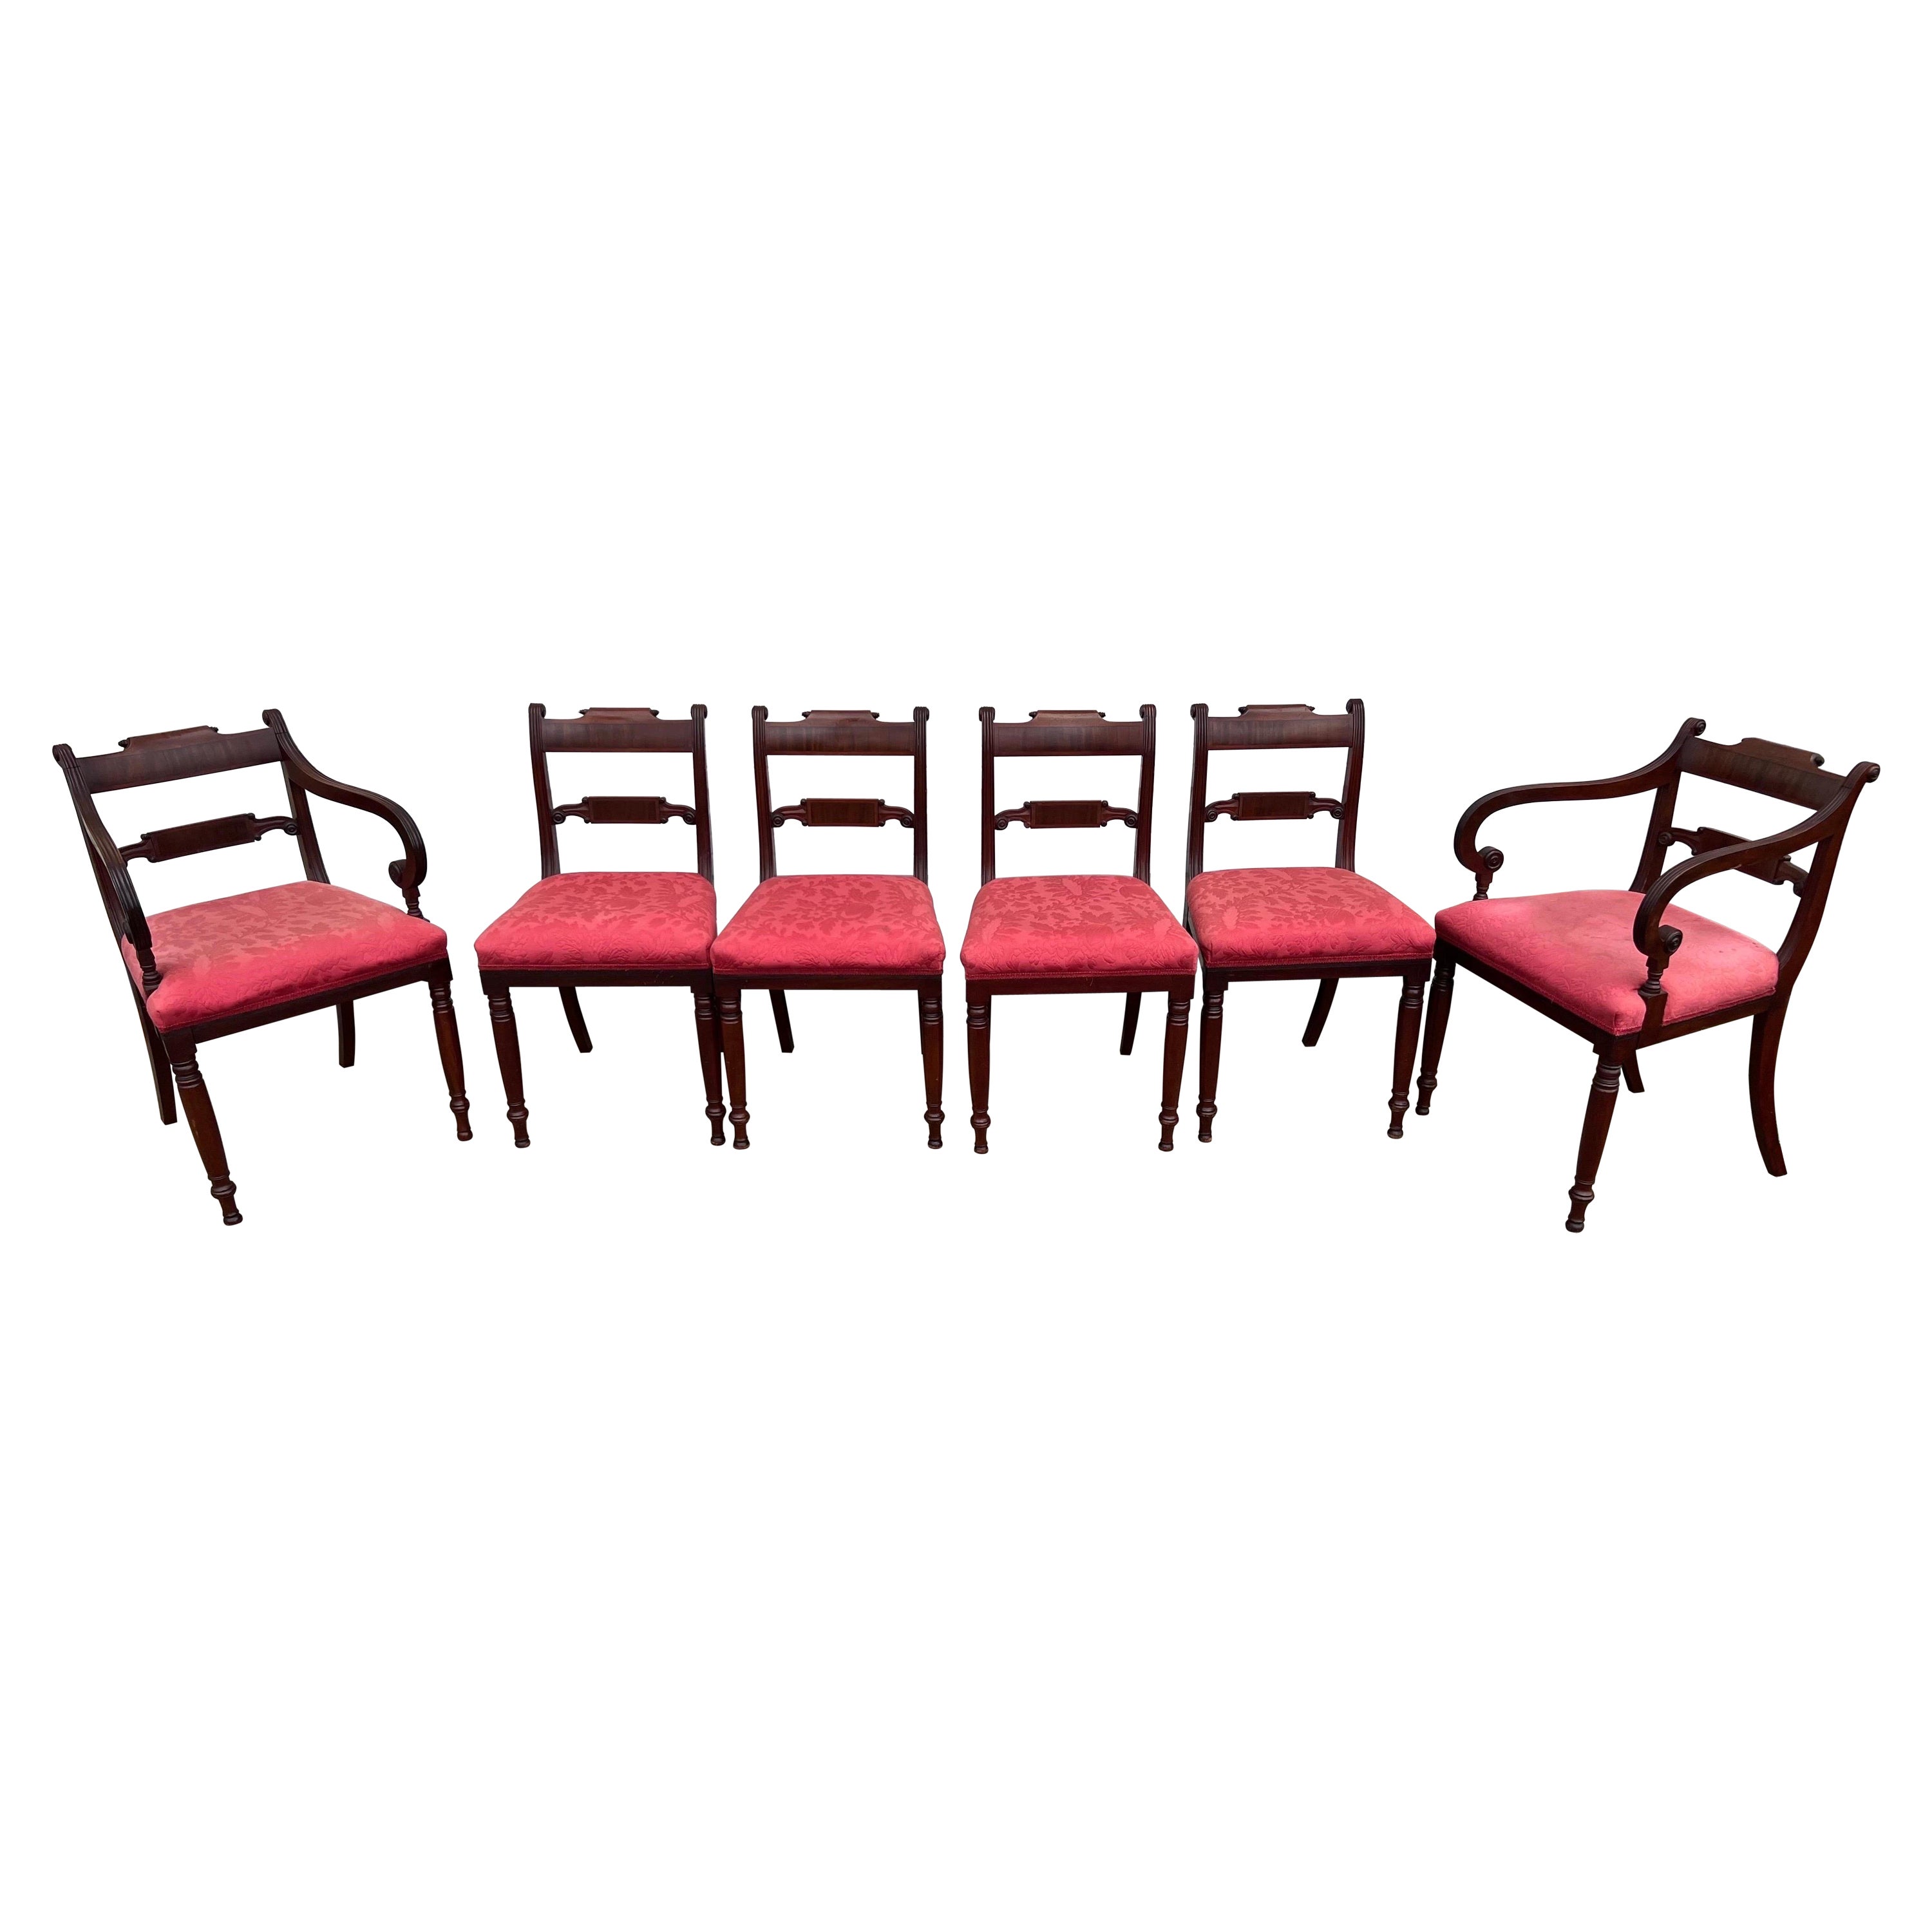 Set of 6 19th Century Mahogany English Regency Dining Chairs